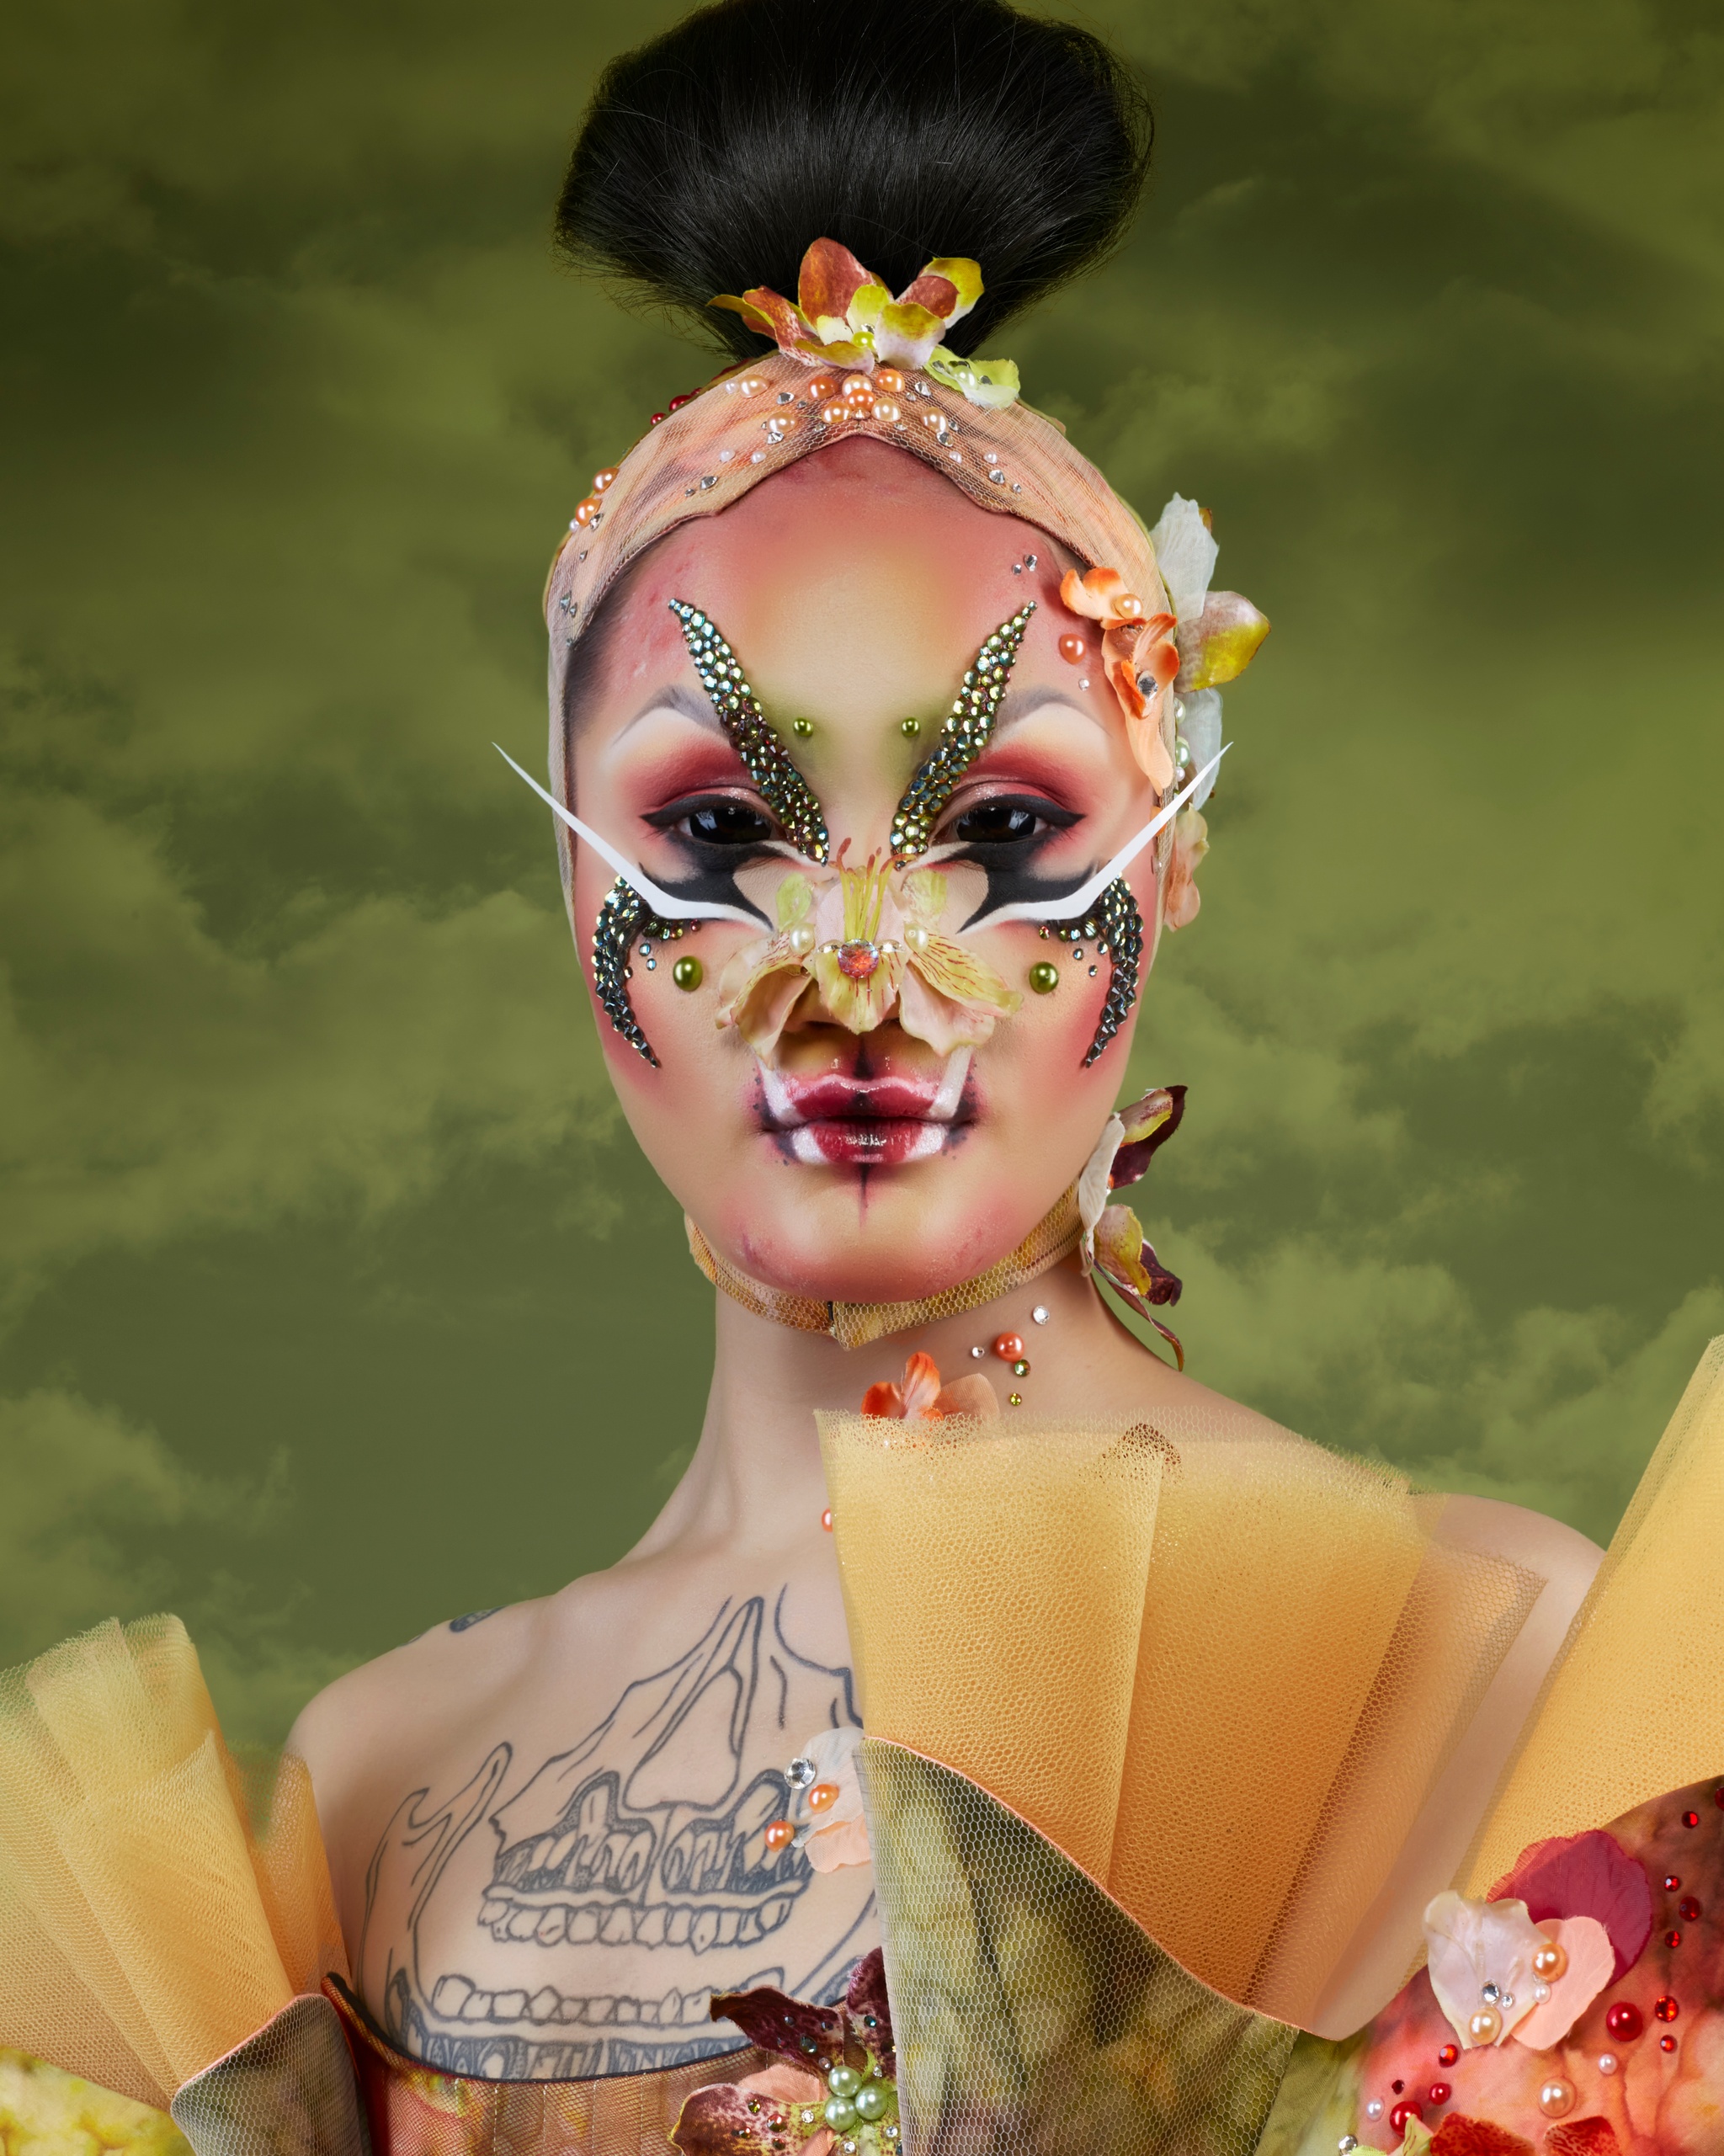 A portrait of Björk's makeup artist Hungry